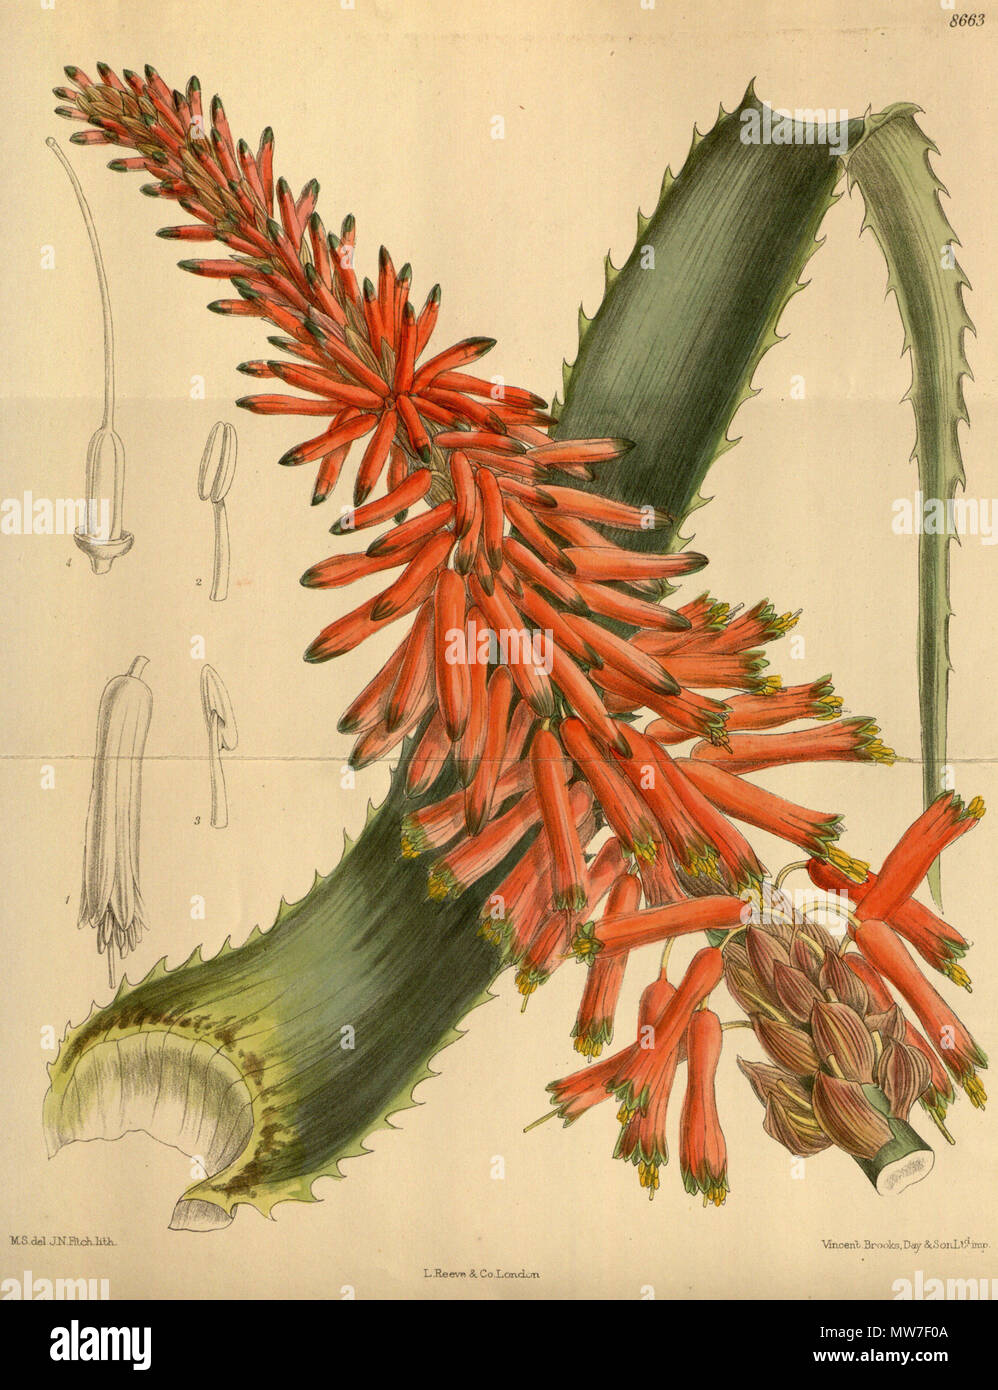 . Aloe arborescens var. natalensis, Xanthorrhoeaceae . 1916. M.S. del., J.N.Fitch lith. 39 Aloe arborescens natalensis 142-8663 Stock Photo